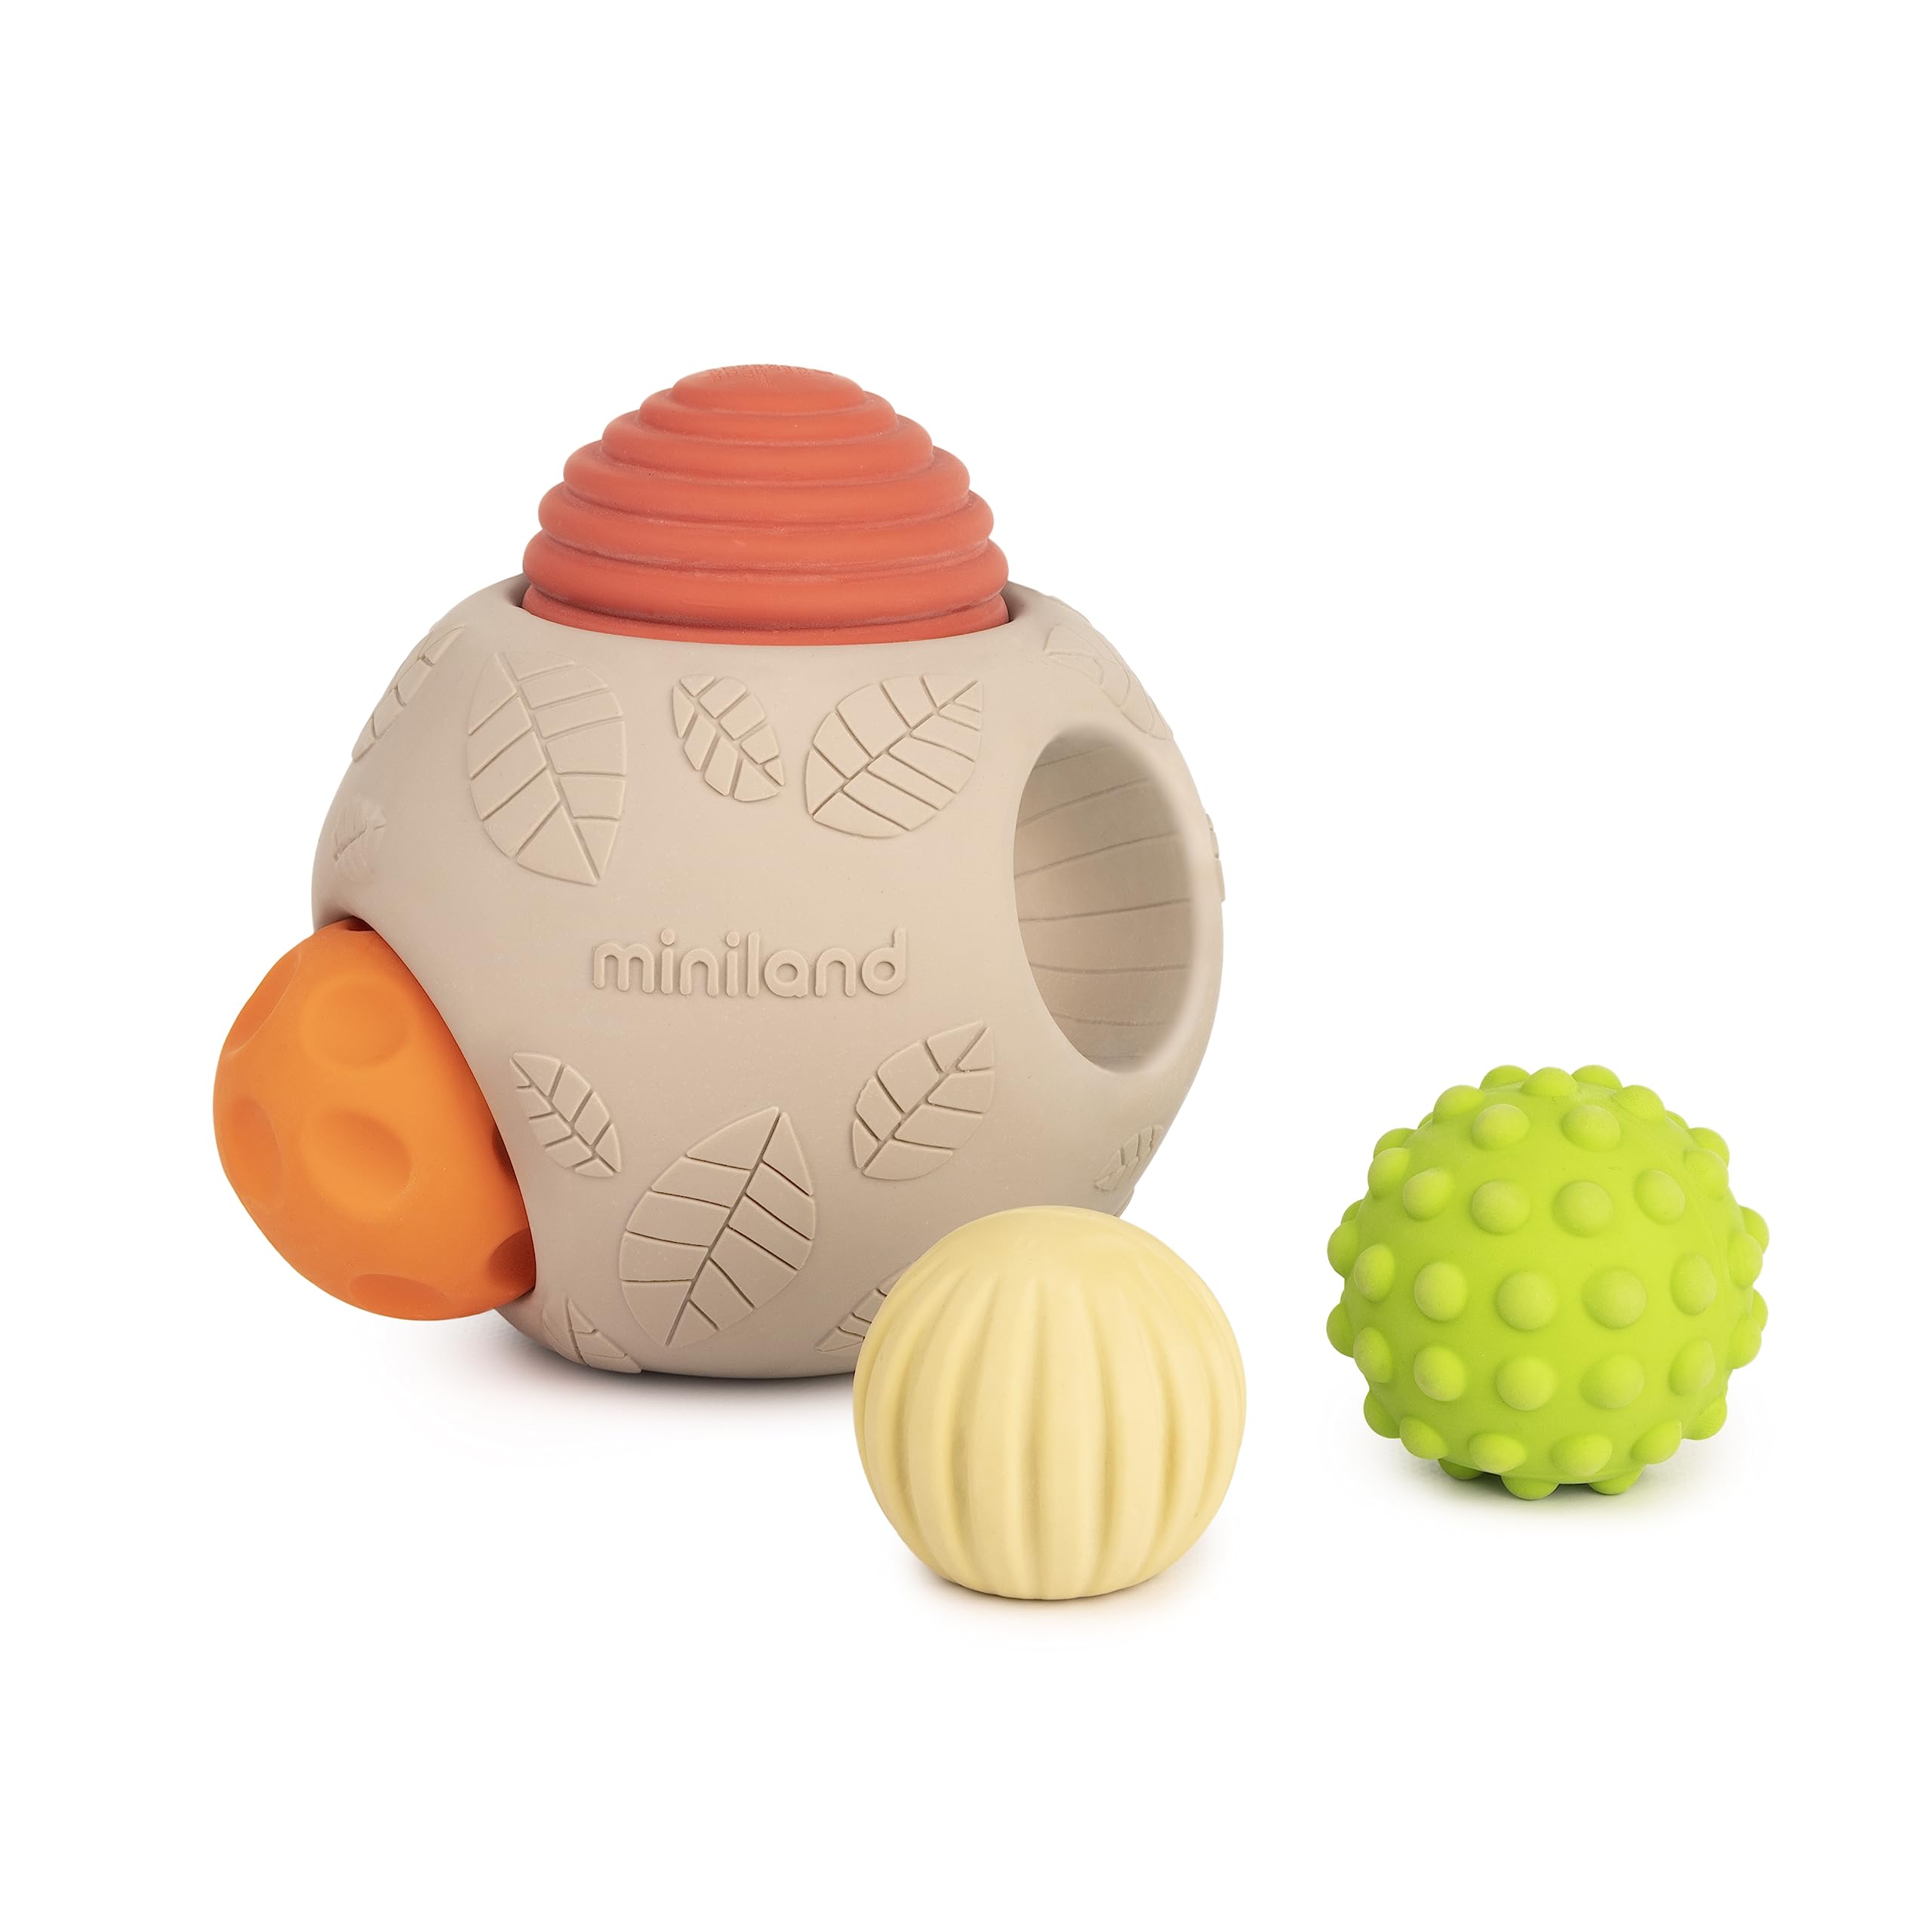 Miniland Big ECO Sensory Balls - 5 Balls of Natural Rubber, Soft Teething Toys, Easy Grip, Multicolor Stimulation and Skill Development